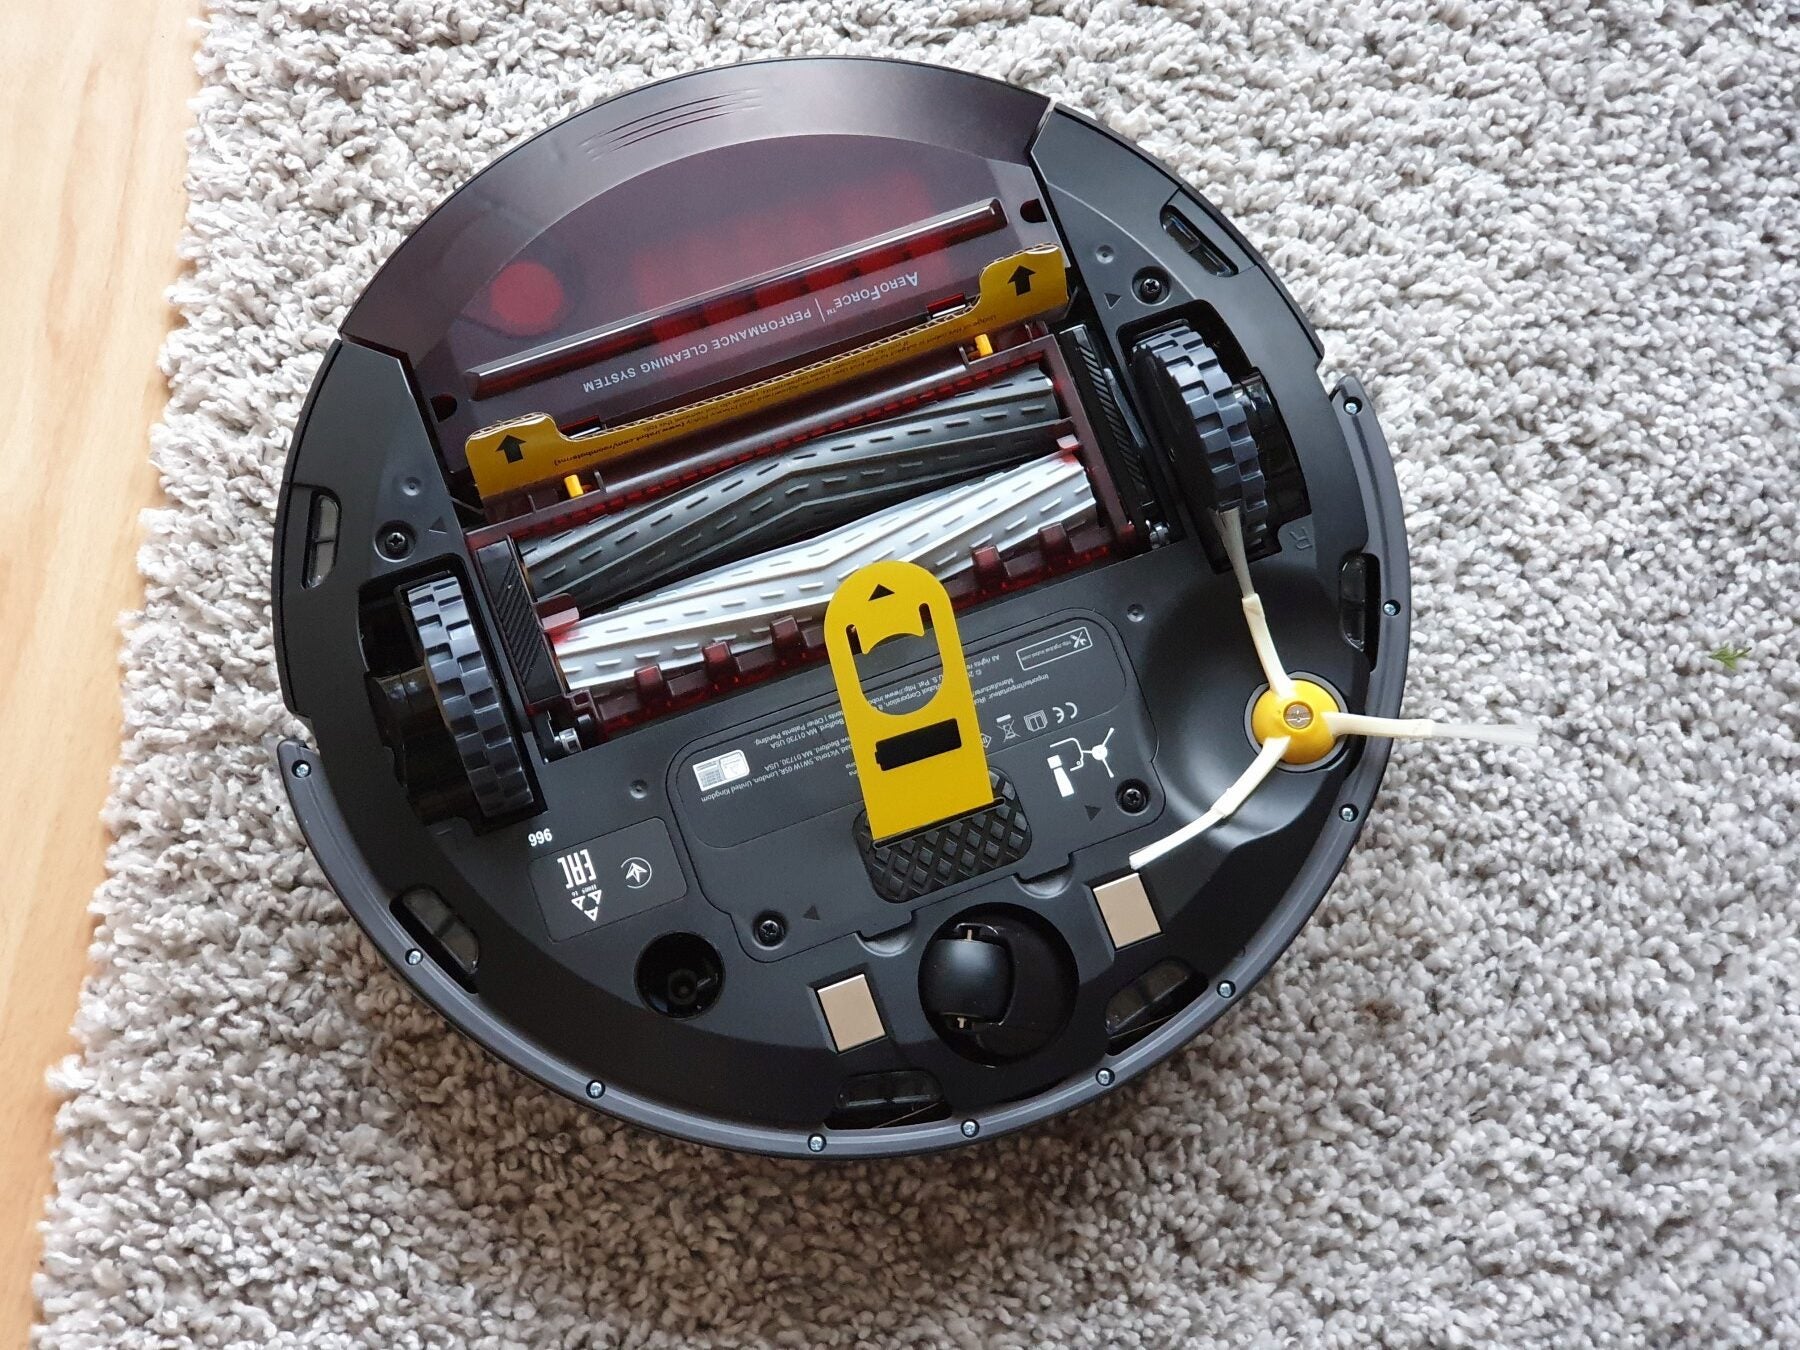 iRobot Roomba Testbericht: So gut ist "Volks-Saugroboter"